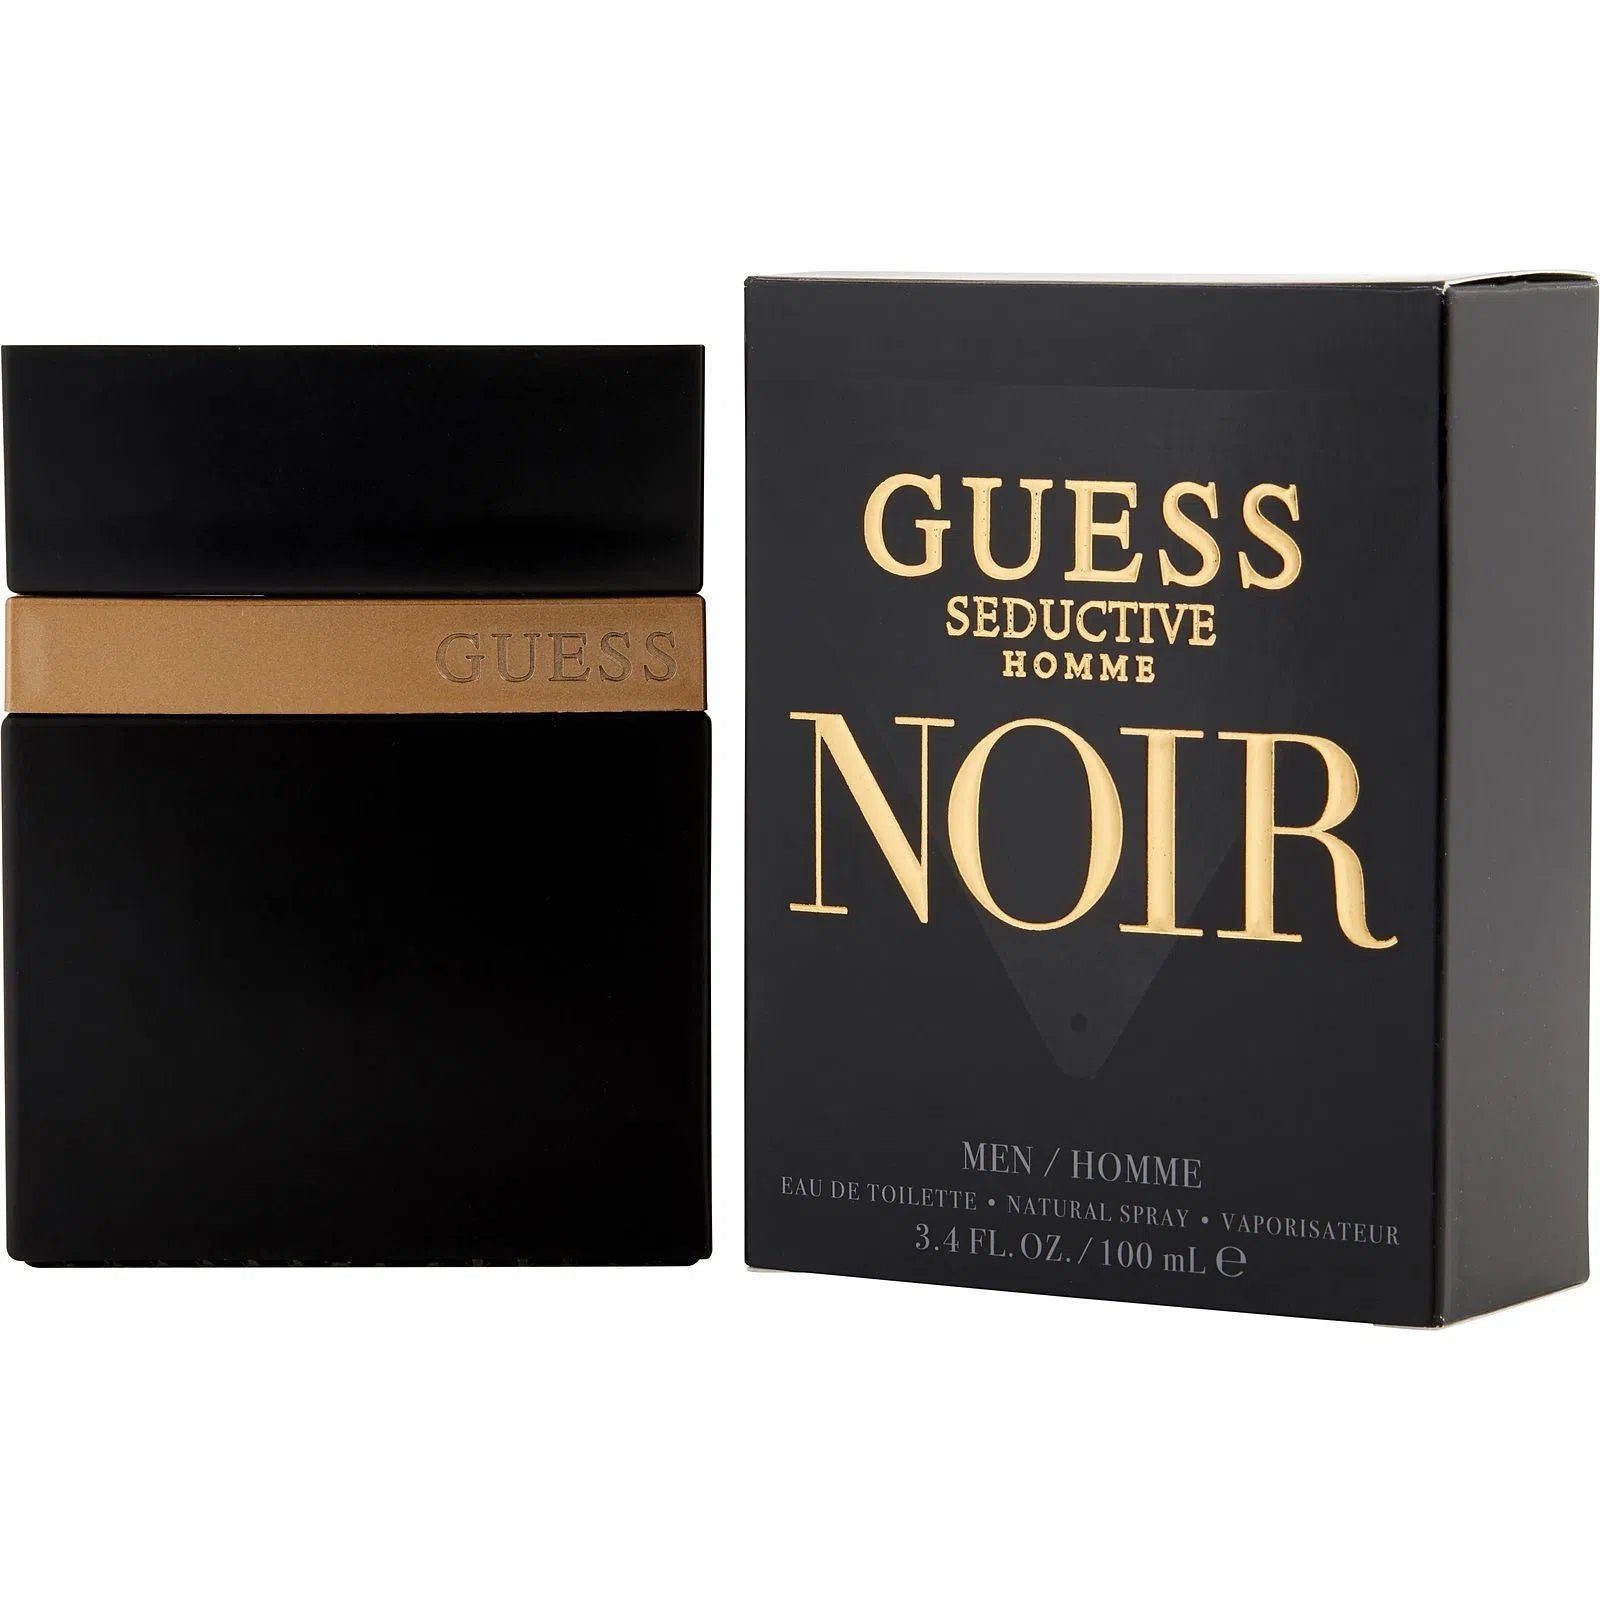 Perfume Guess Seductive Homme Noir EDT (M) / 100 ml - 085715320377- Prive Perfumes Honduras